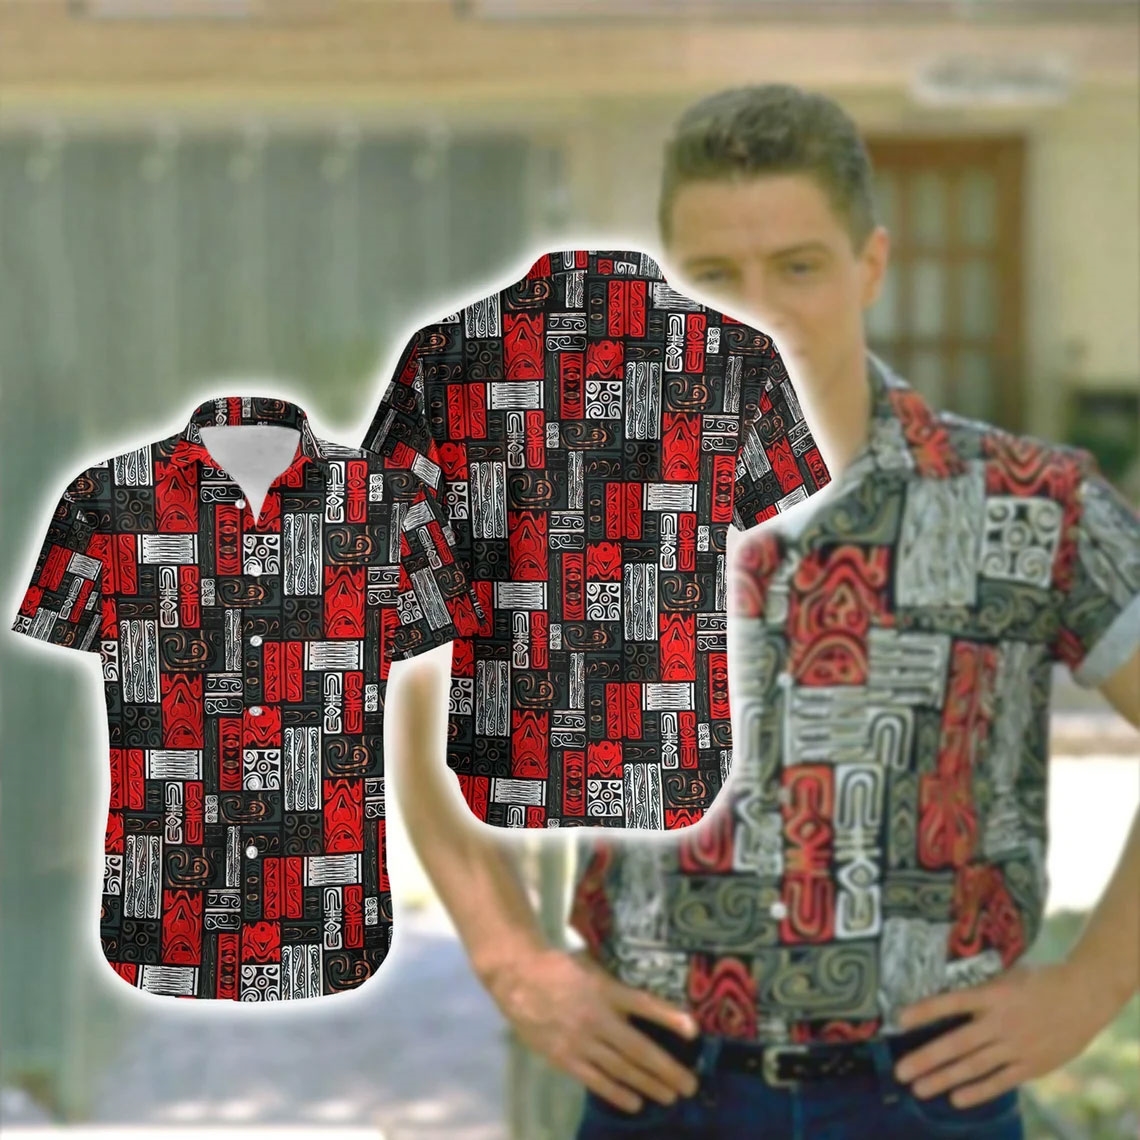 Biff Tannen Back to the Future Hawaiian Shirt #BiffTannen #BacktotheFuture #getlatests getlatests.com/product/biff-t…